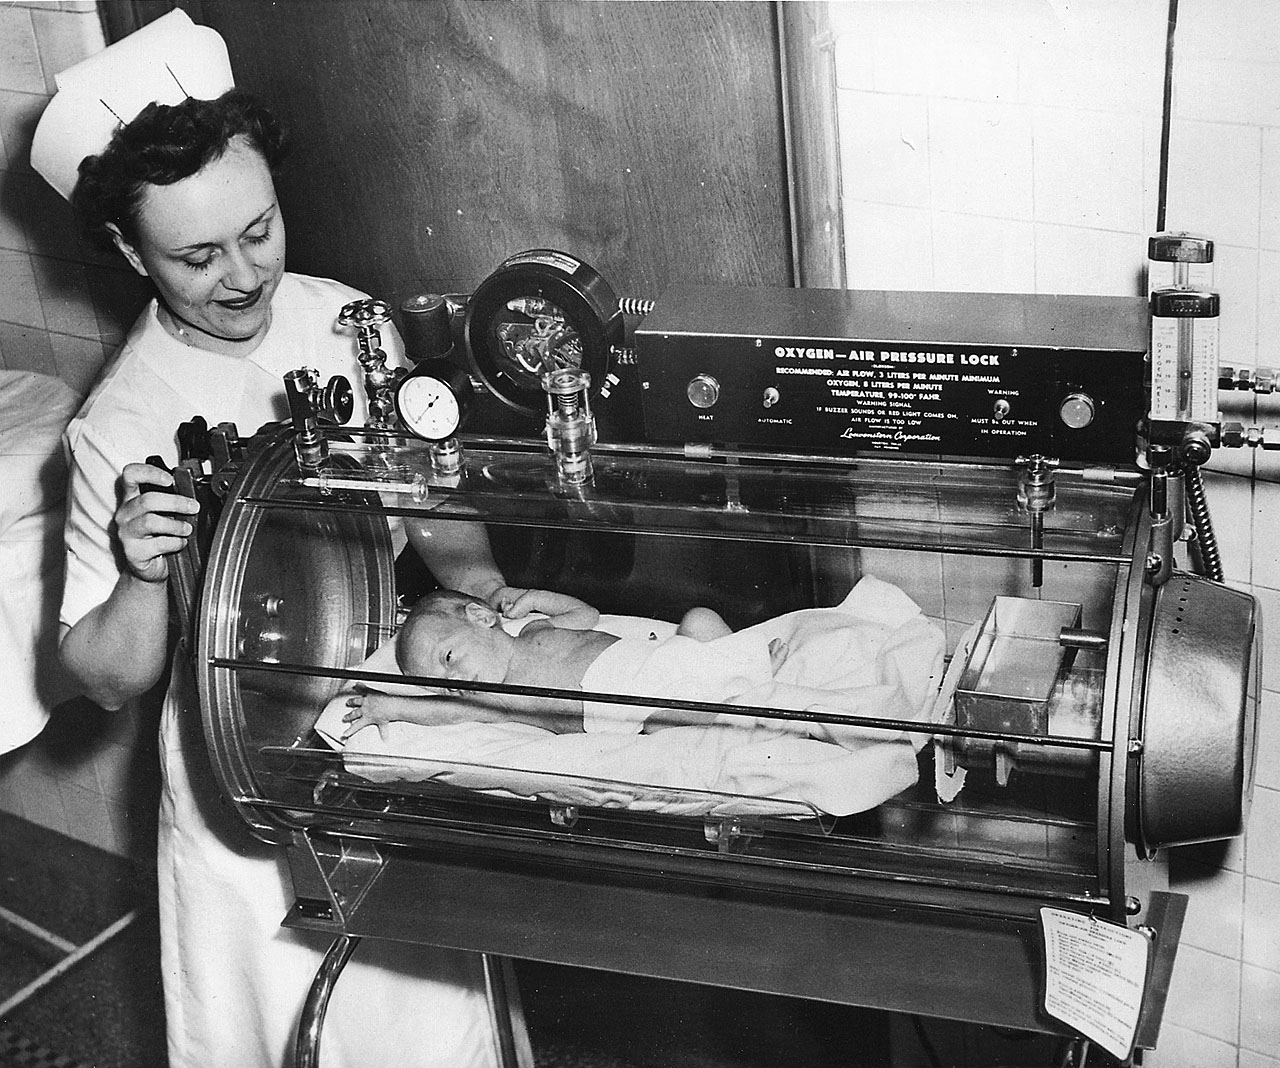 An incubator for newborn babies in 1952.